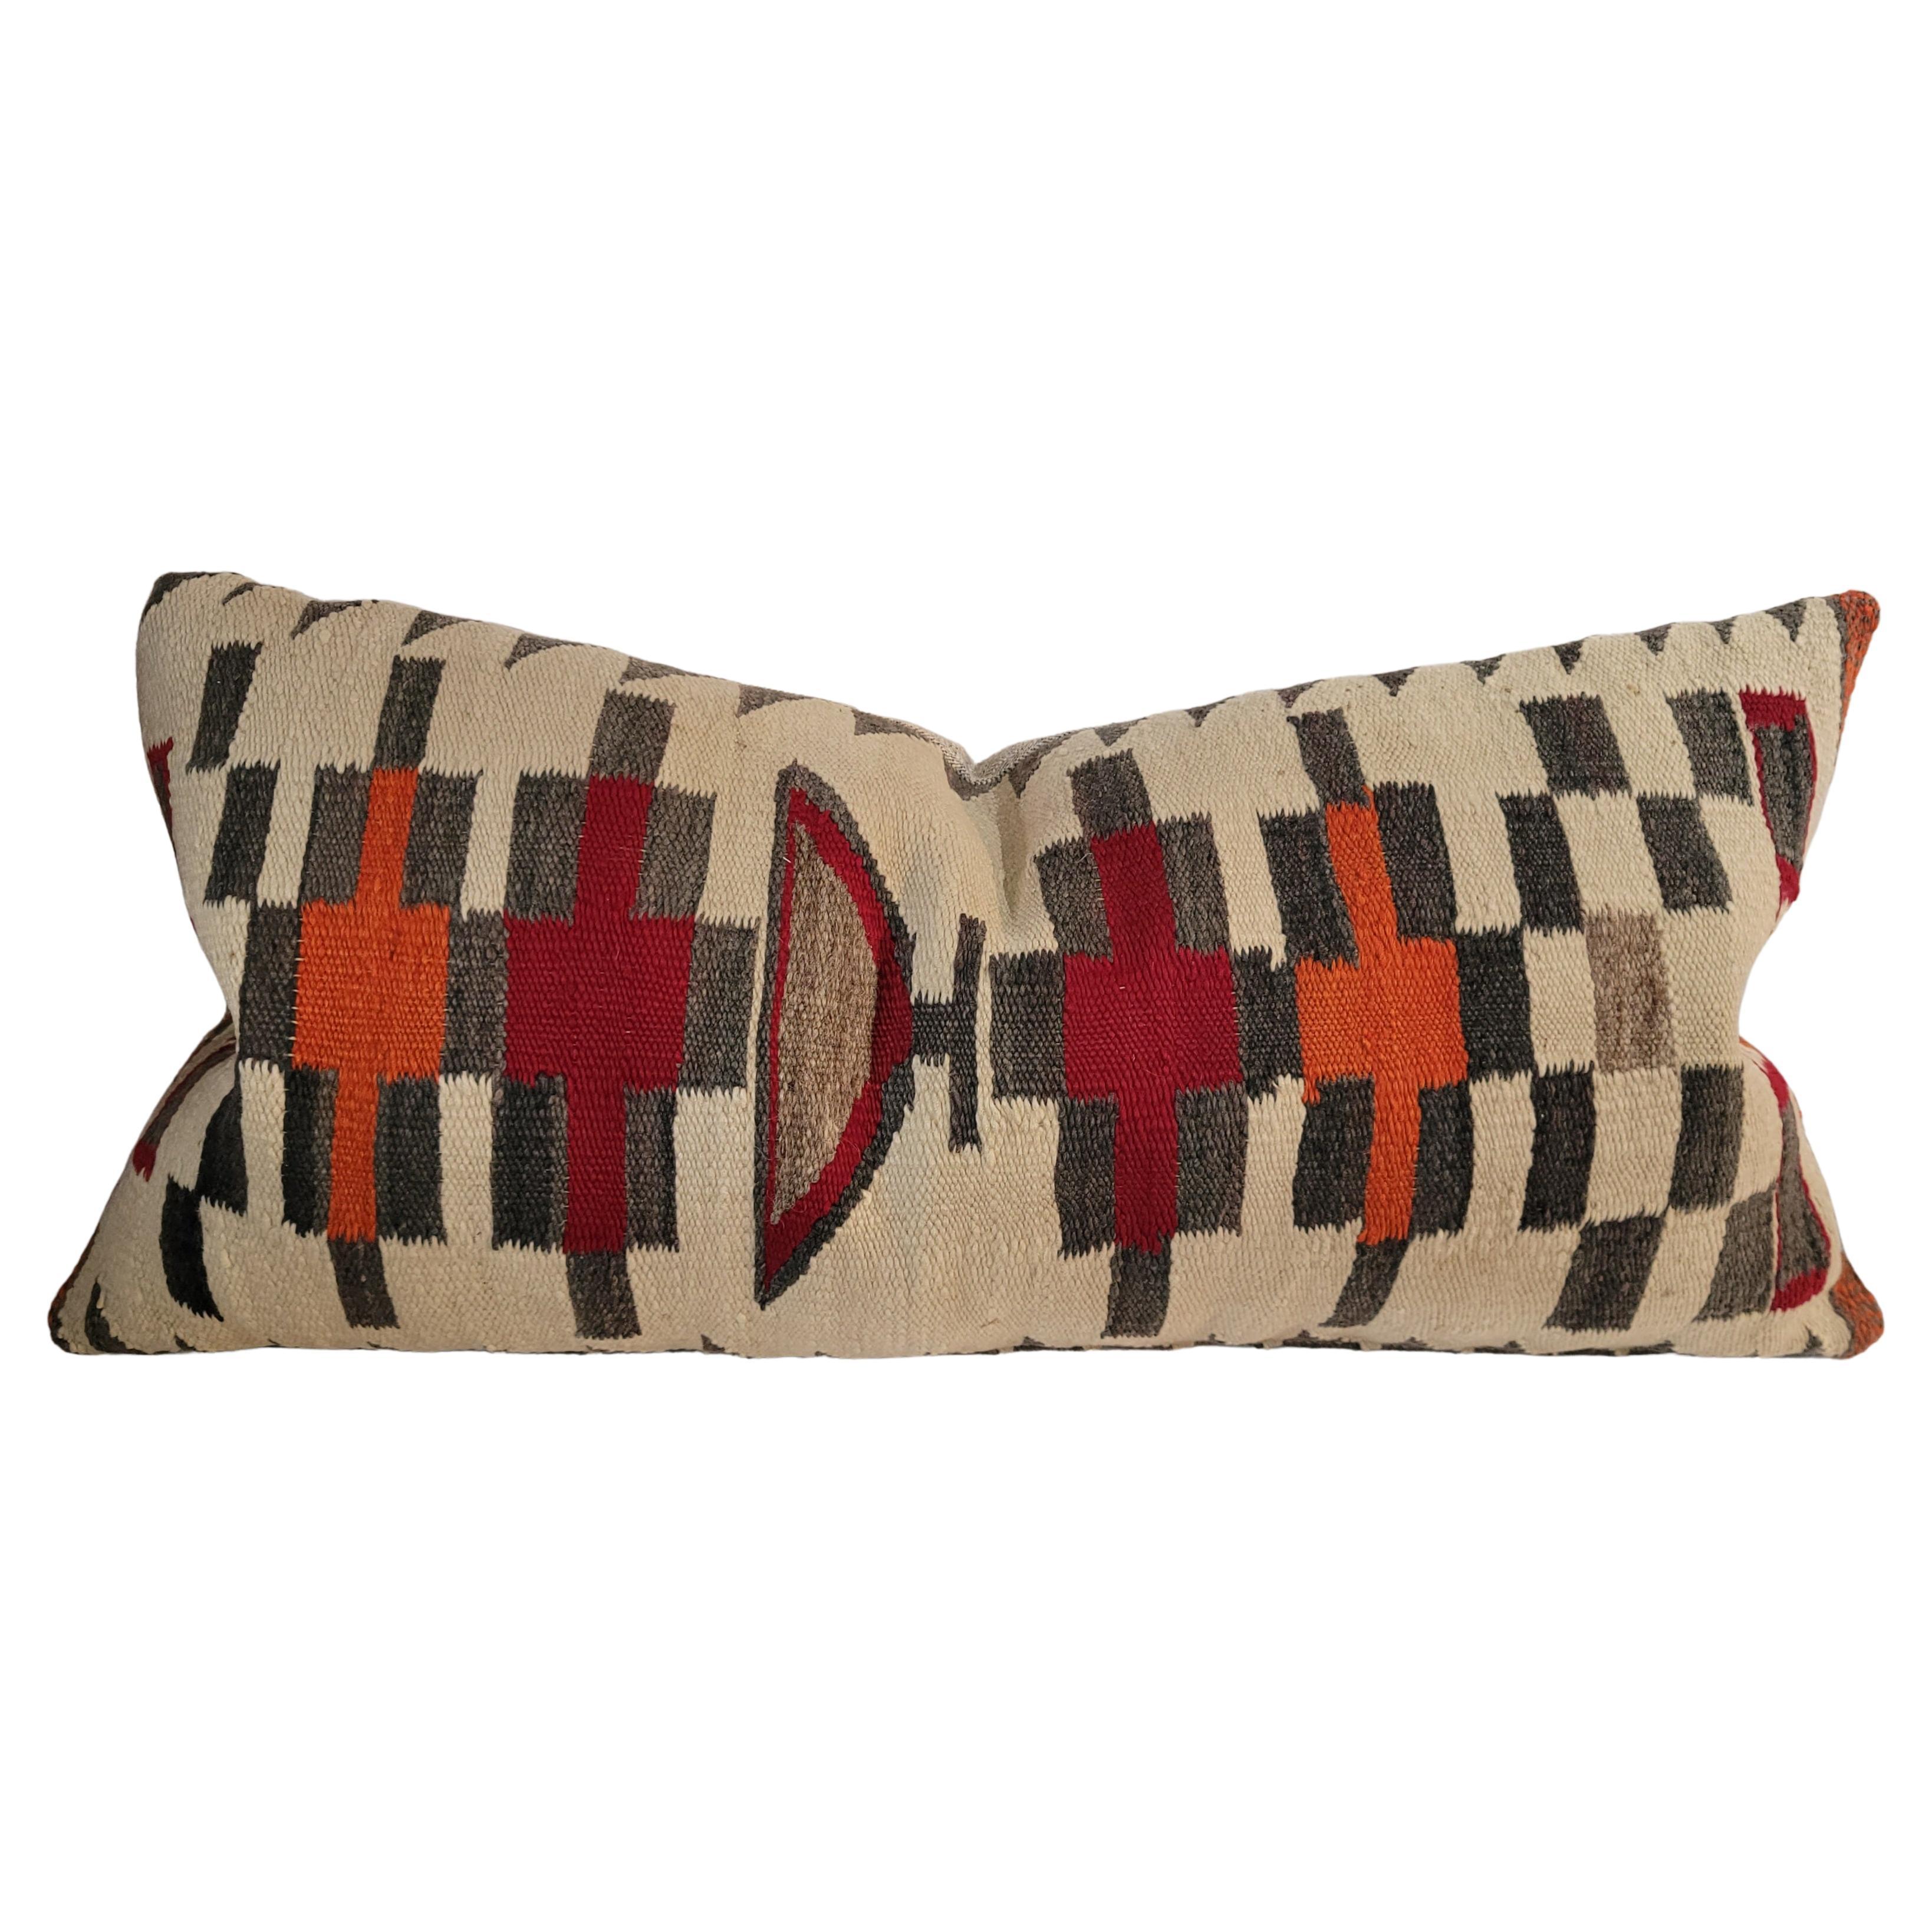 Geometric Navajo Indian Weaving Bolster Pillow